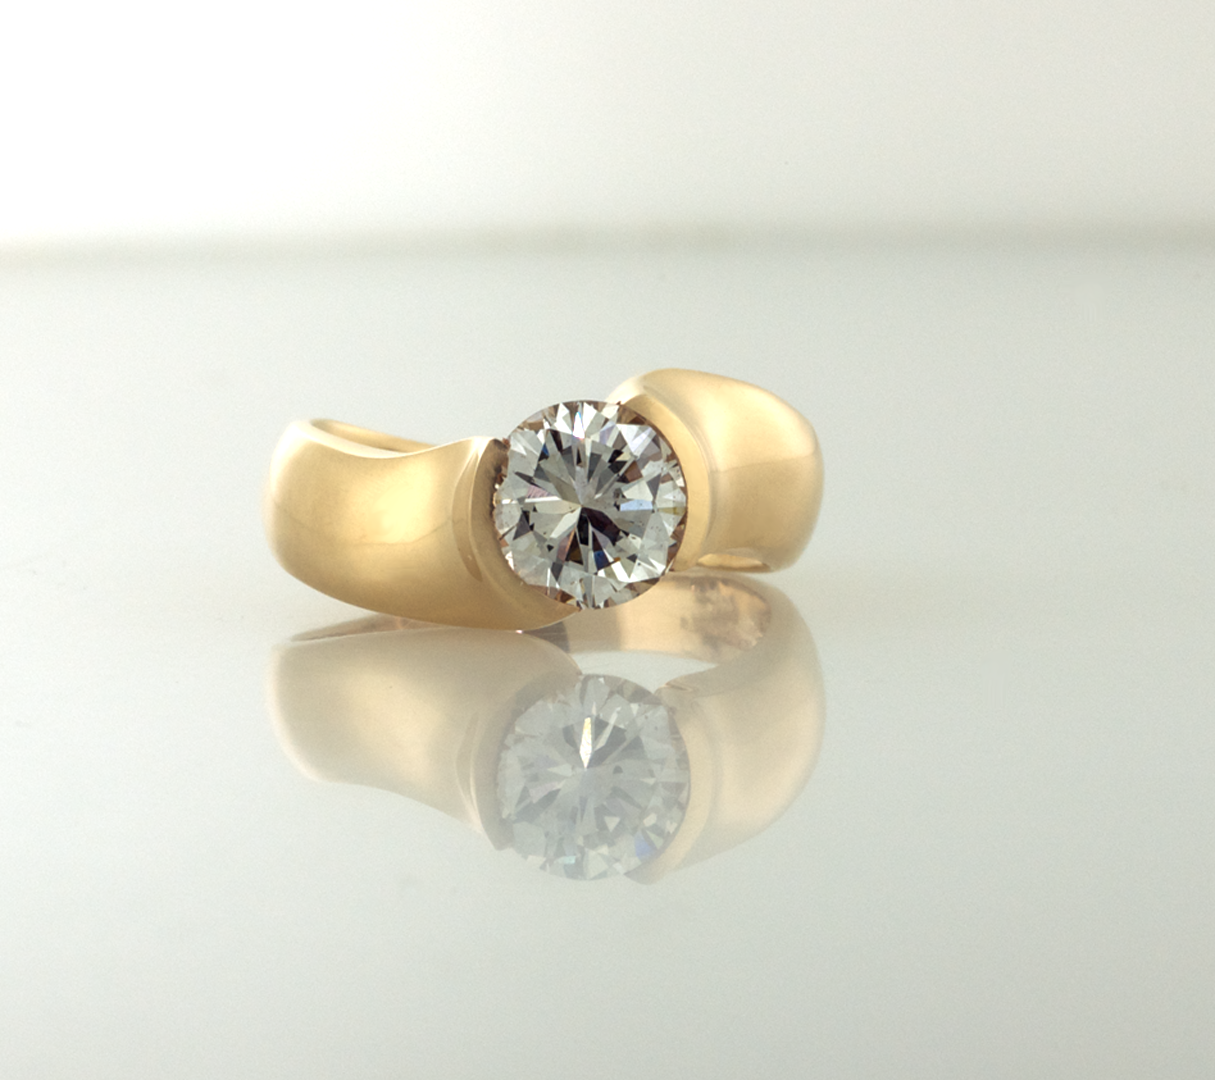 Diamonds and gold solitare contemporary ring